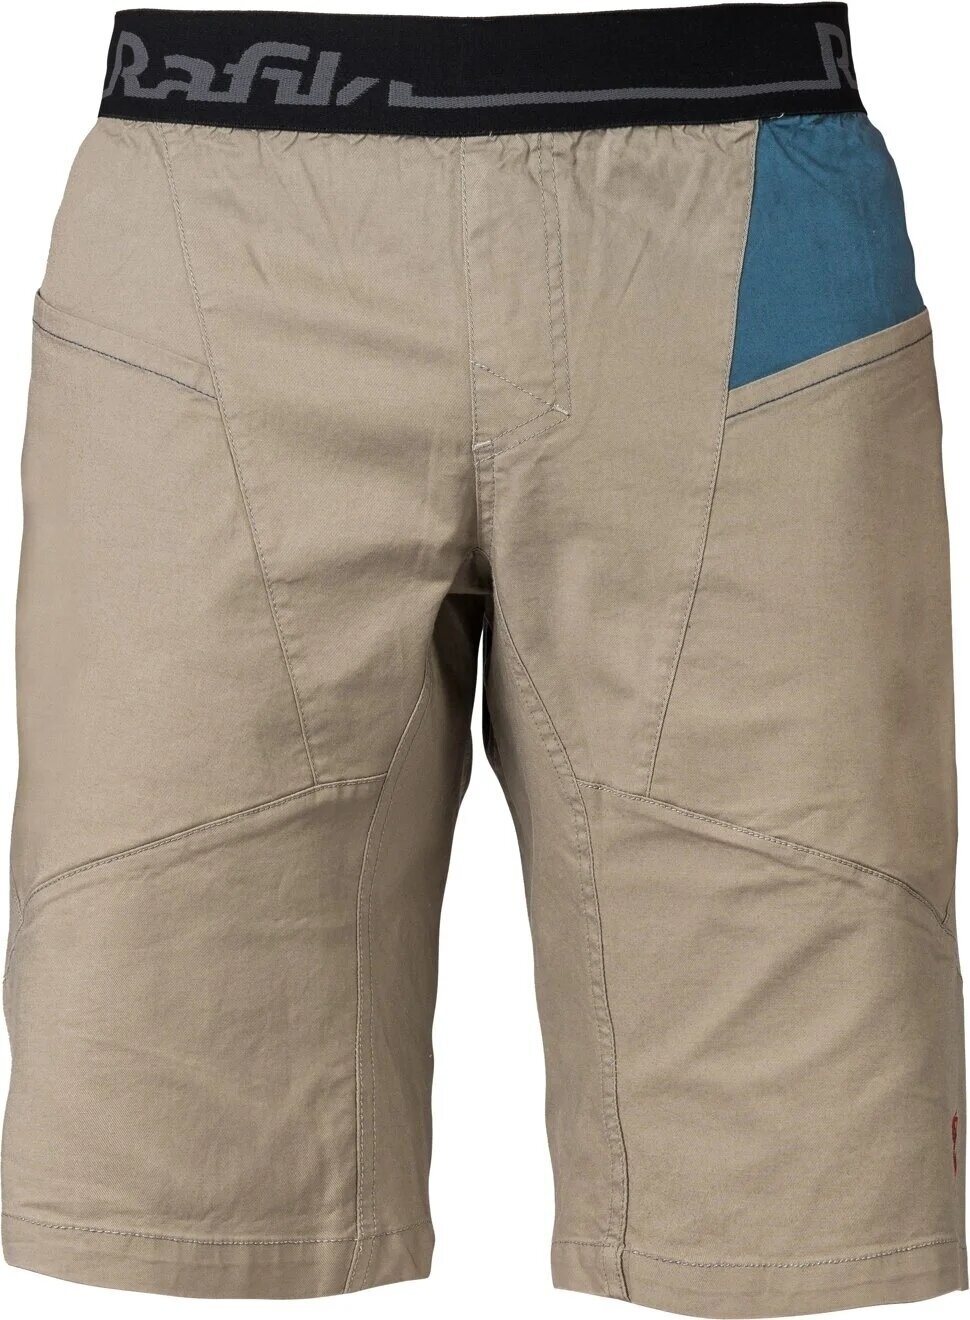 Къси панталонки Rafiki Megos Man Shorts Brindle/Stargazer XL Къси панталонки